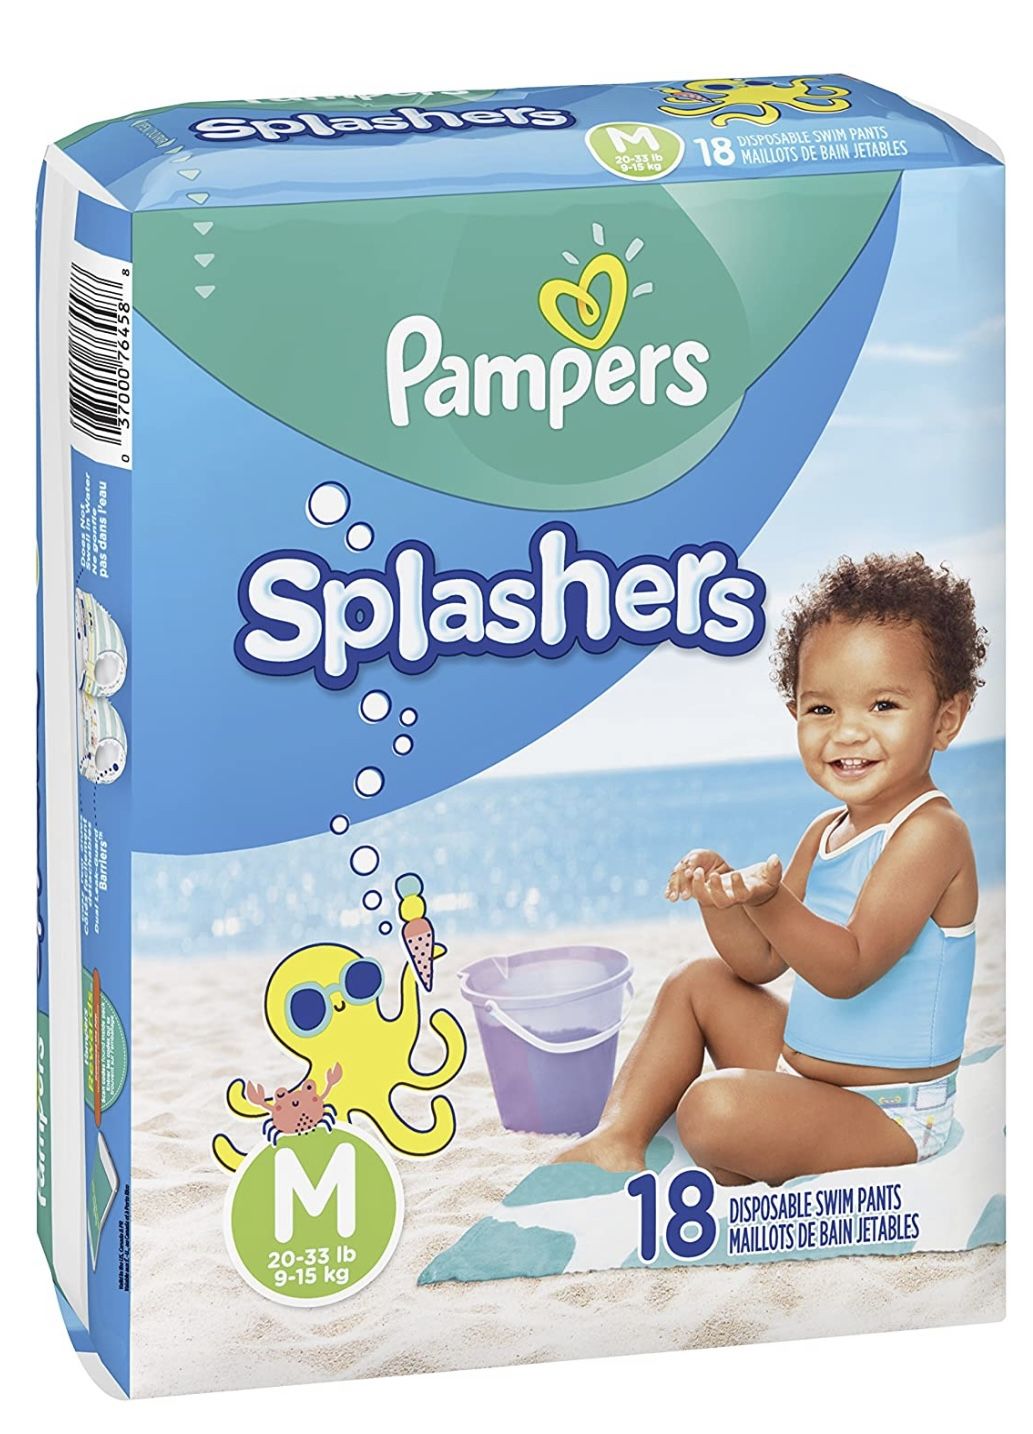 Pampers Splashers 18 Swim Pants (Medium (20-33 Lbs)